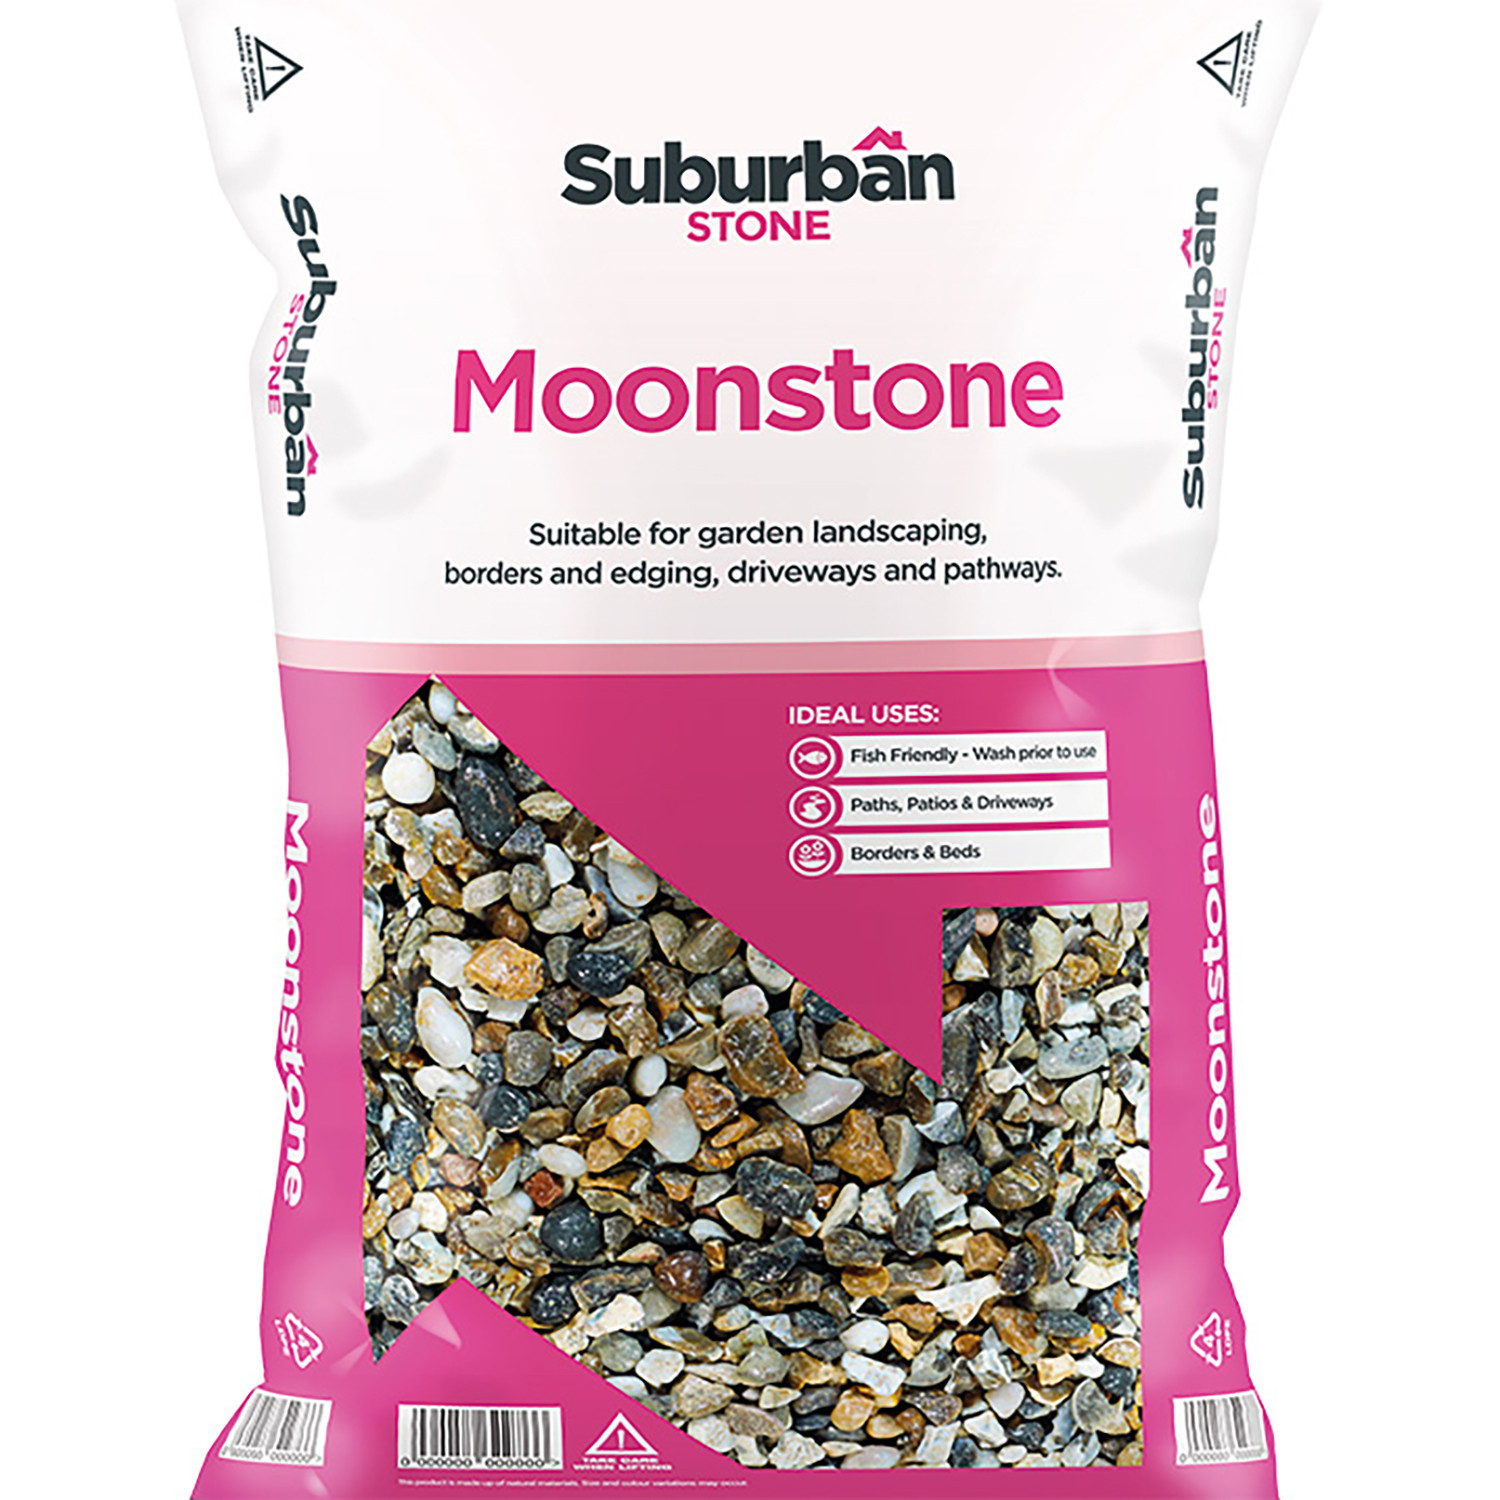 Suburban Stone Moonstone Chippings 20kg Image